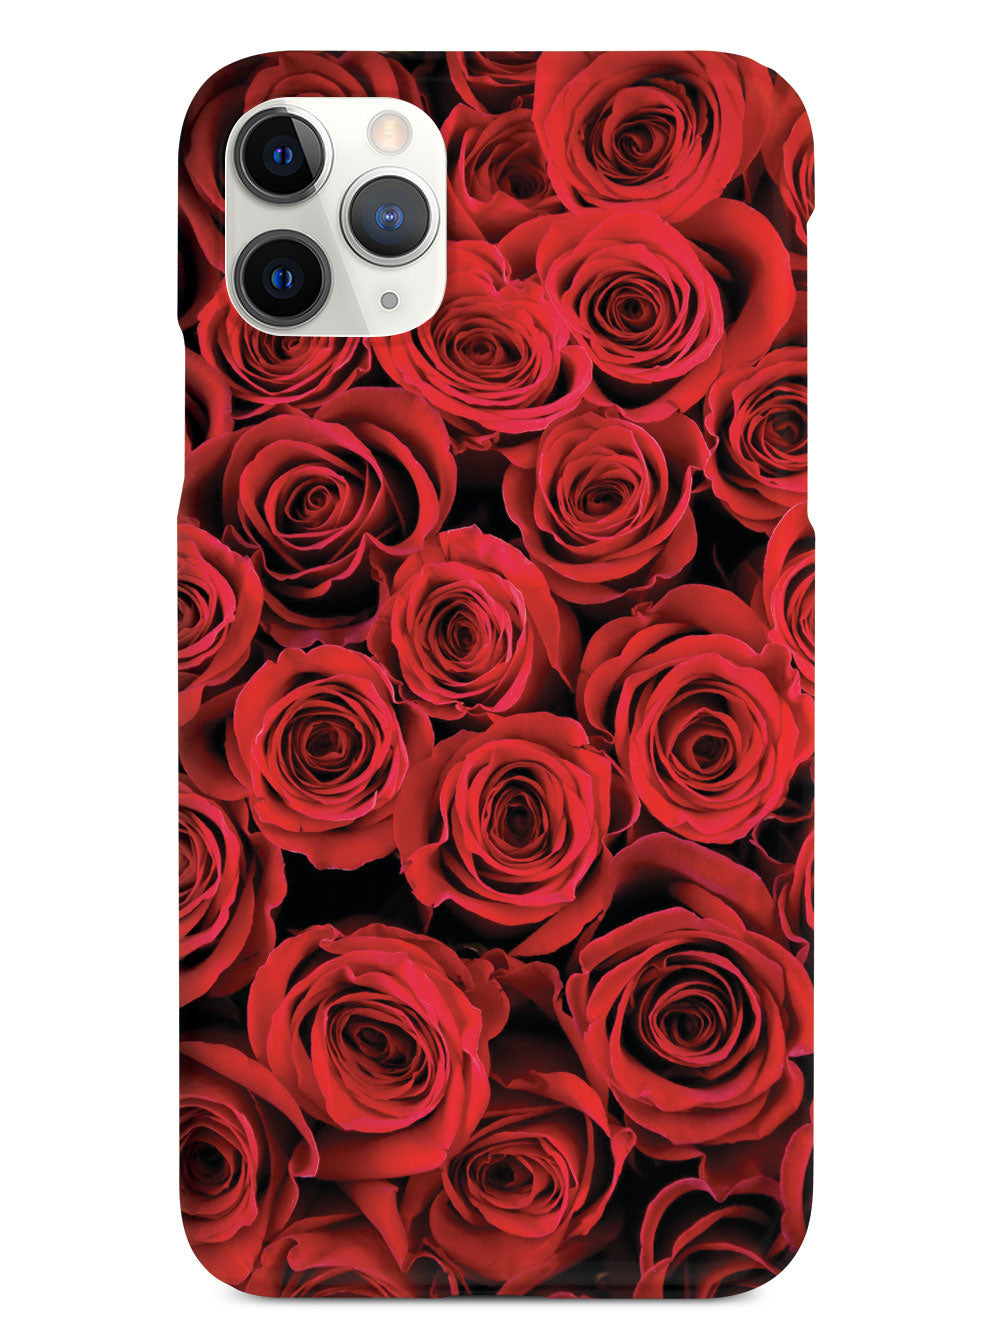 Red Roses - White Case